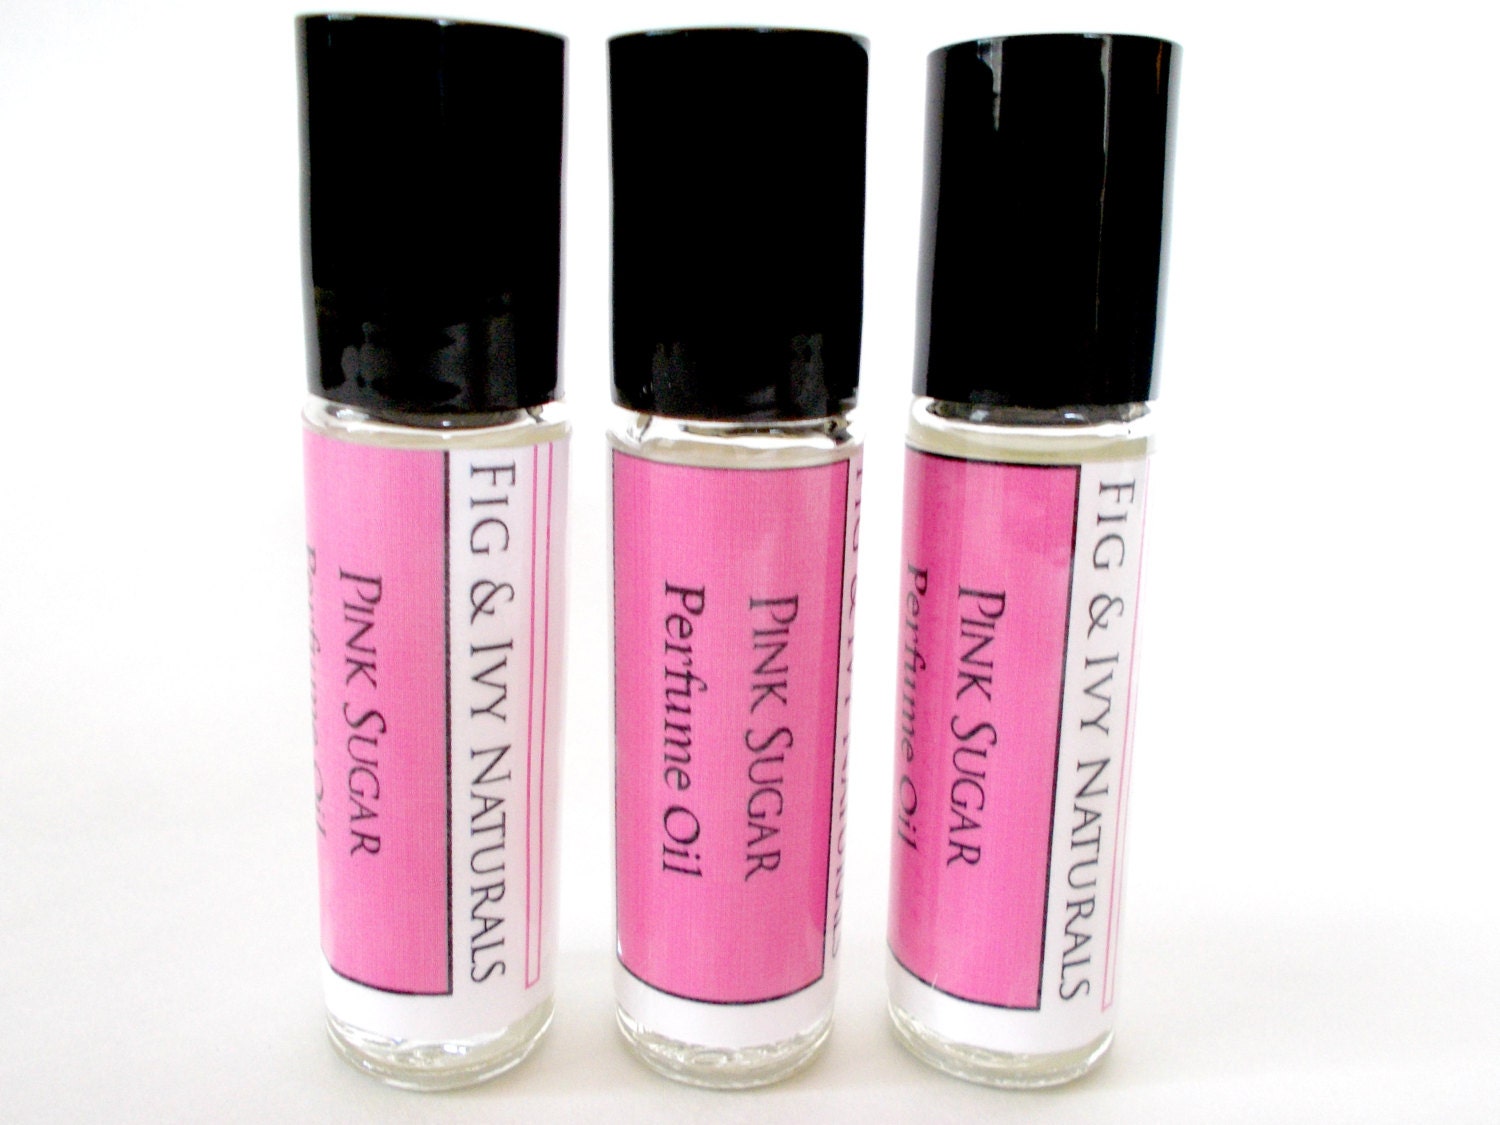 Pink Sugar Perfume Cotton Candy Perfume Raspberry Perfume 